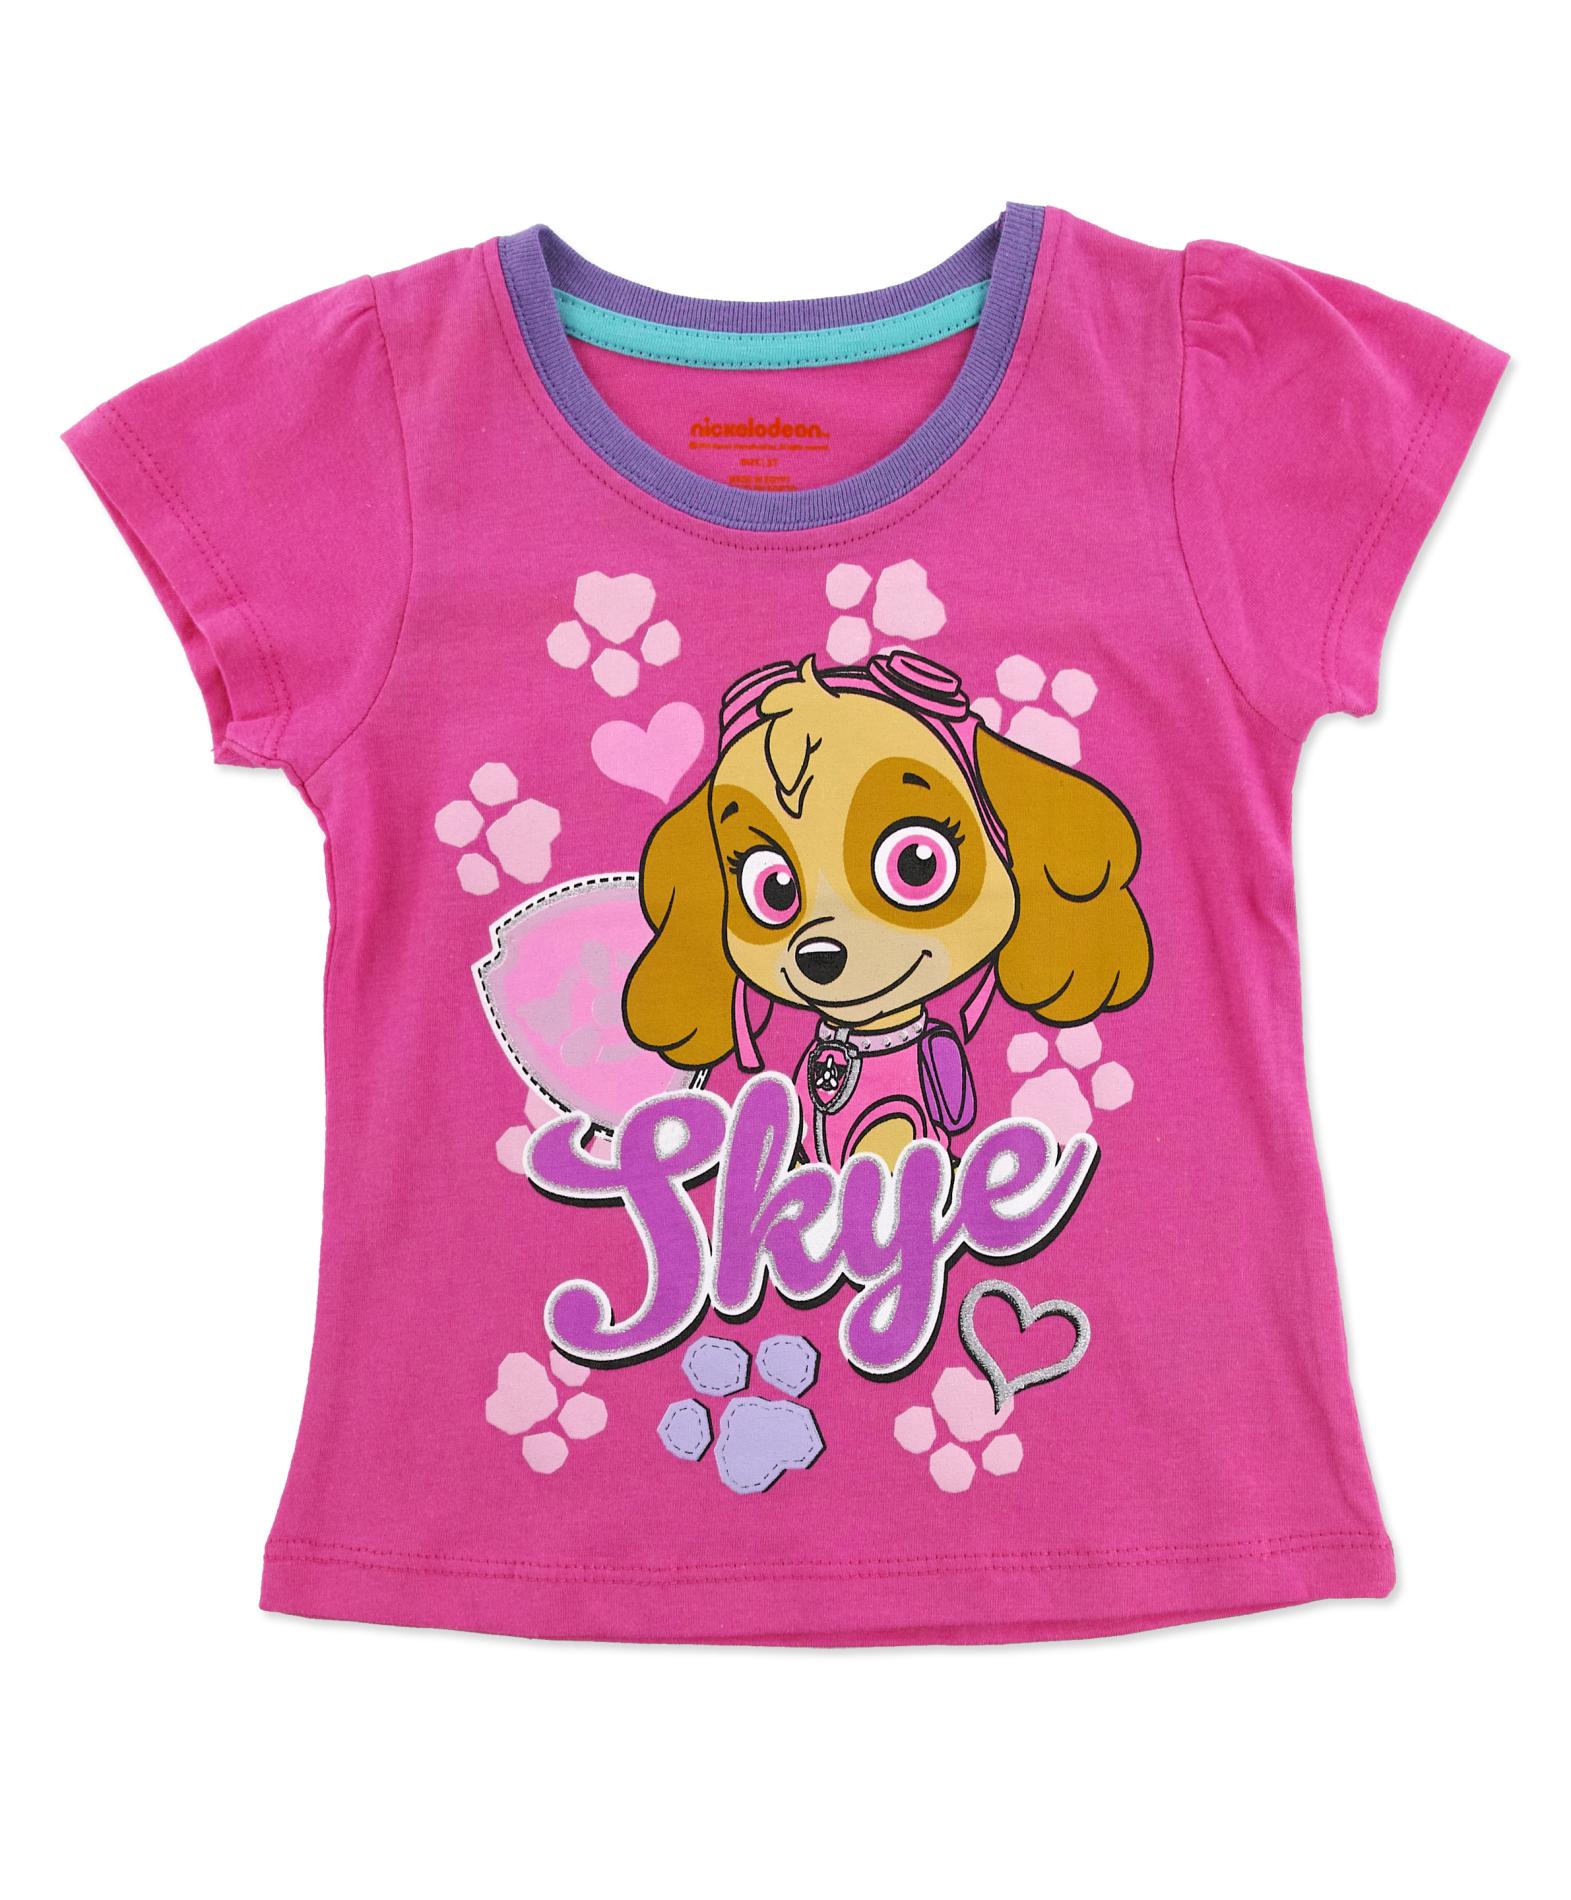 Nickelodeon PAW Patrol Girl's T-Shirt - Skye